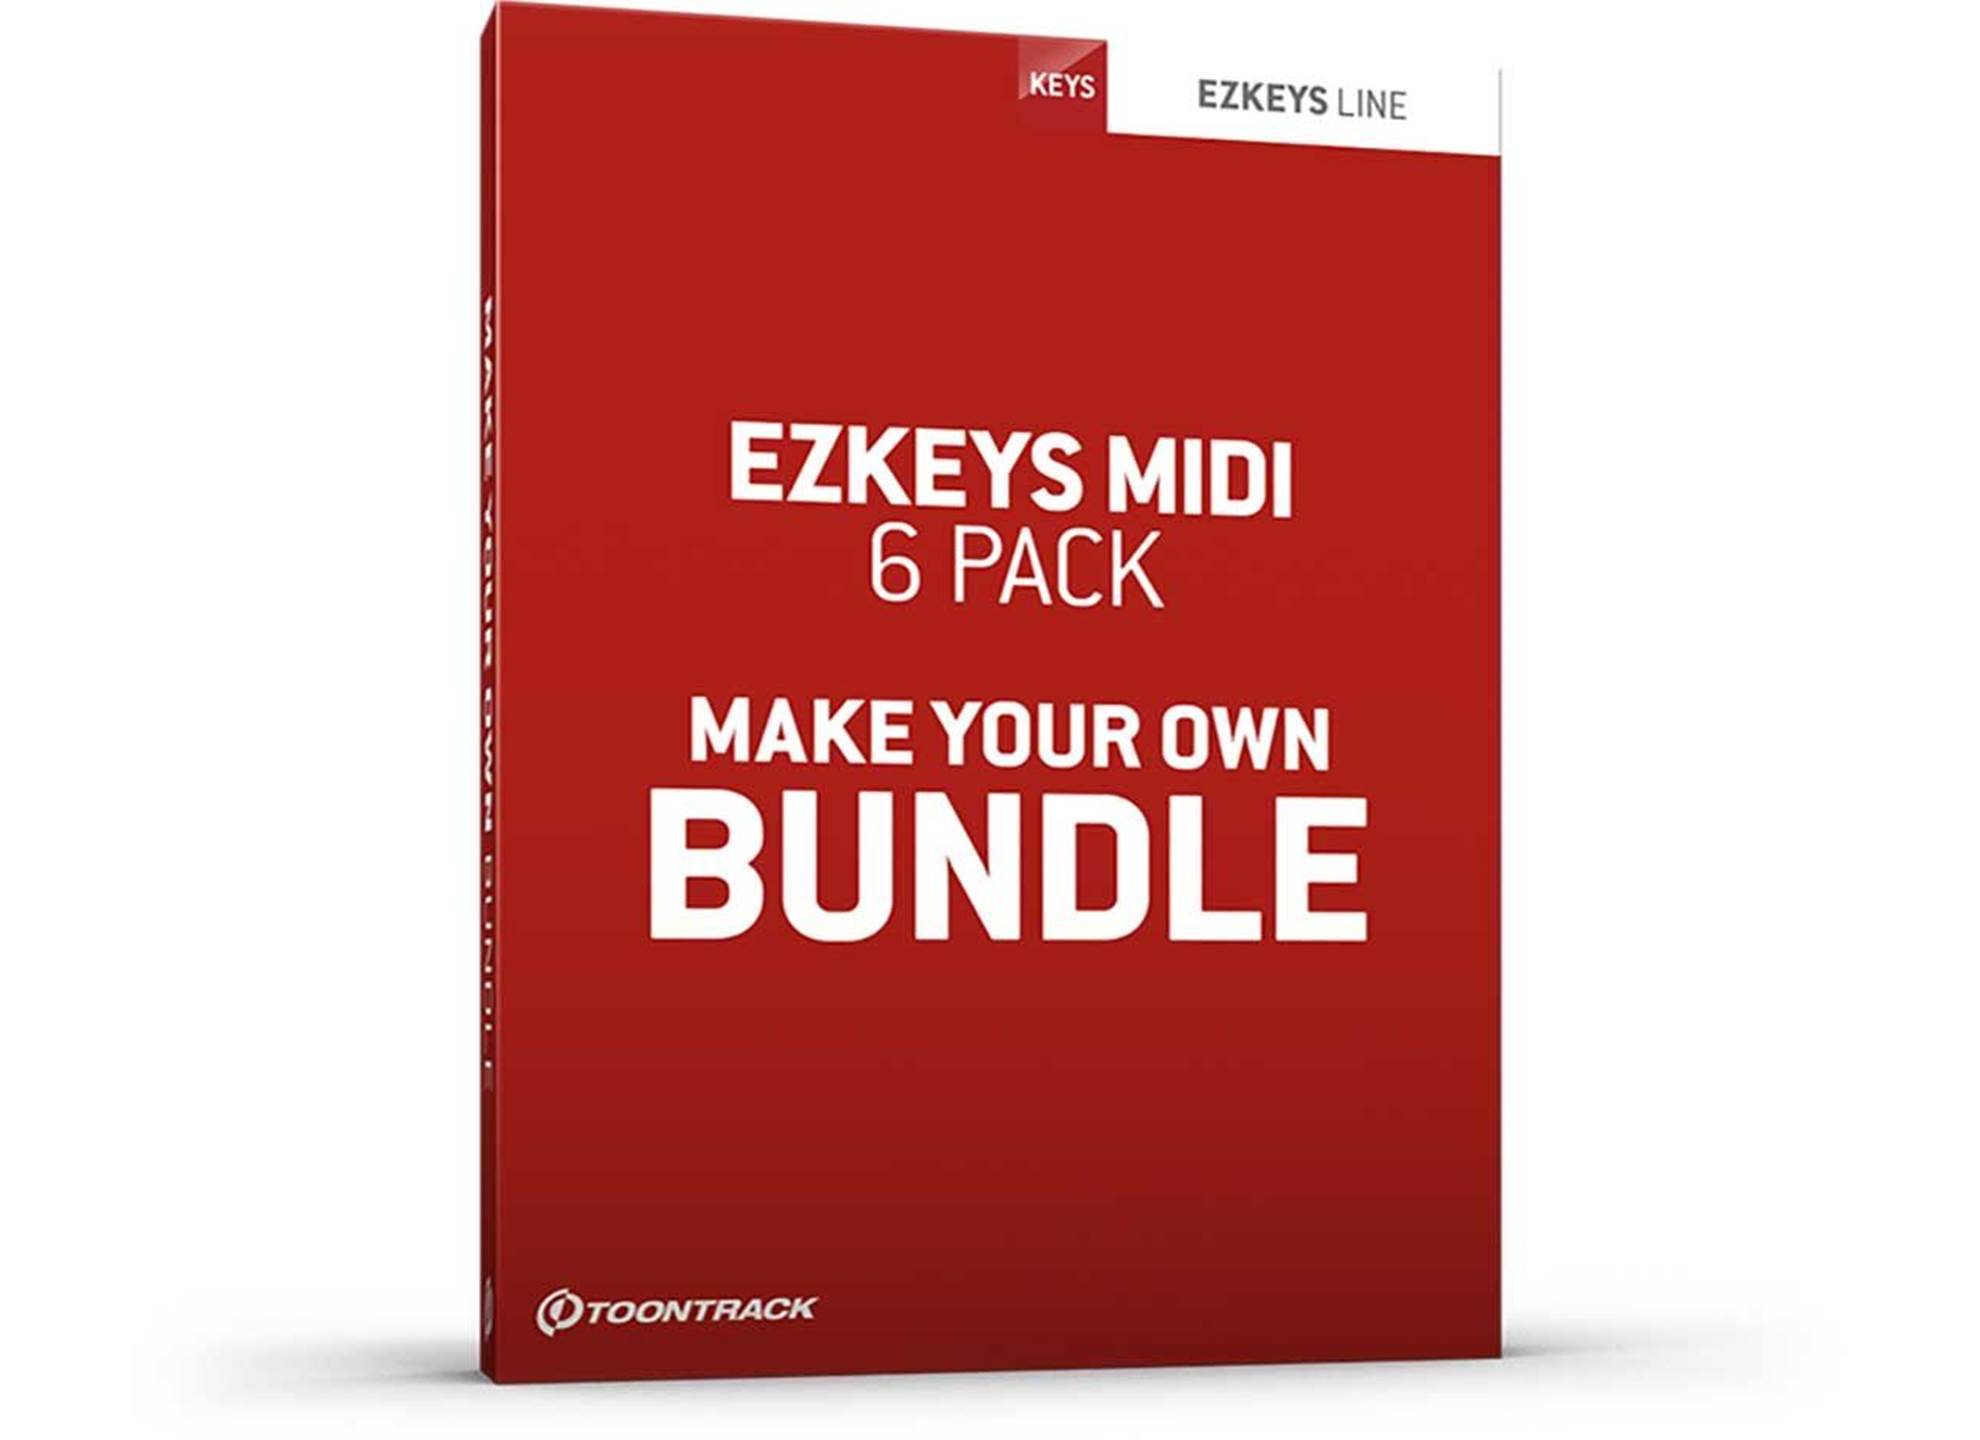 EZkeys MIDI 6 Pack